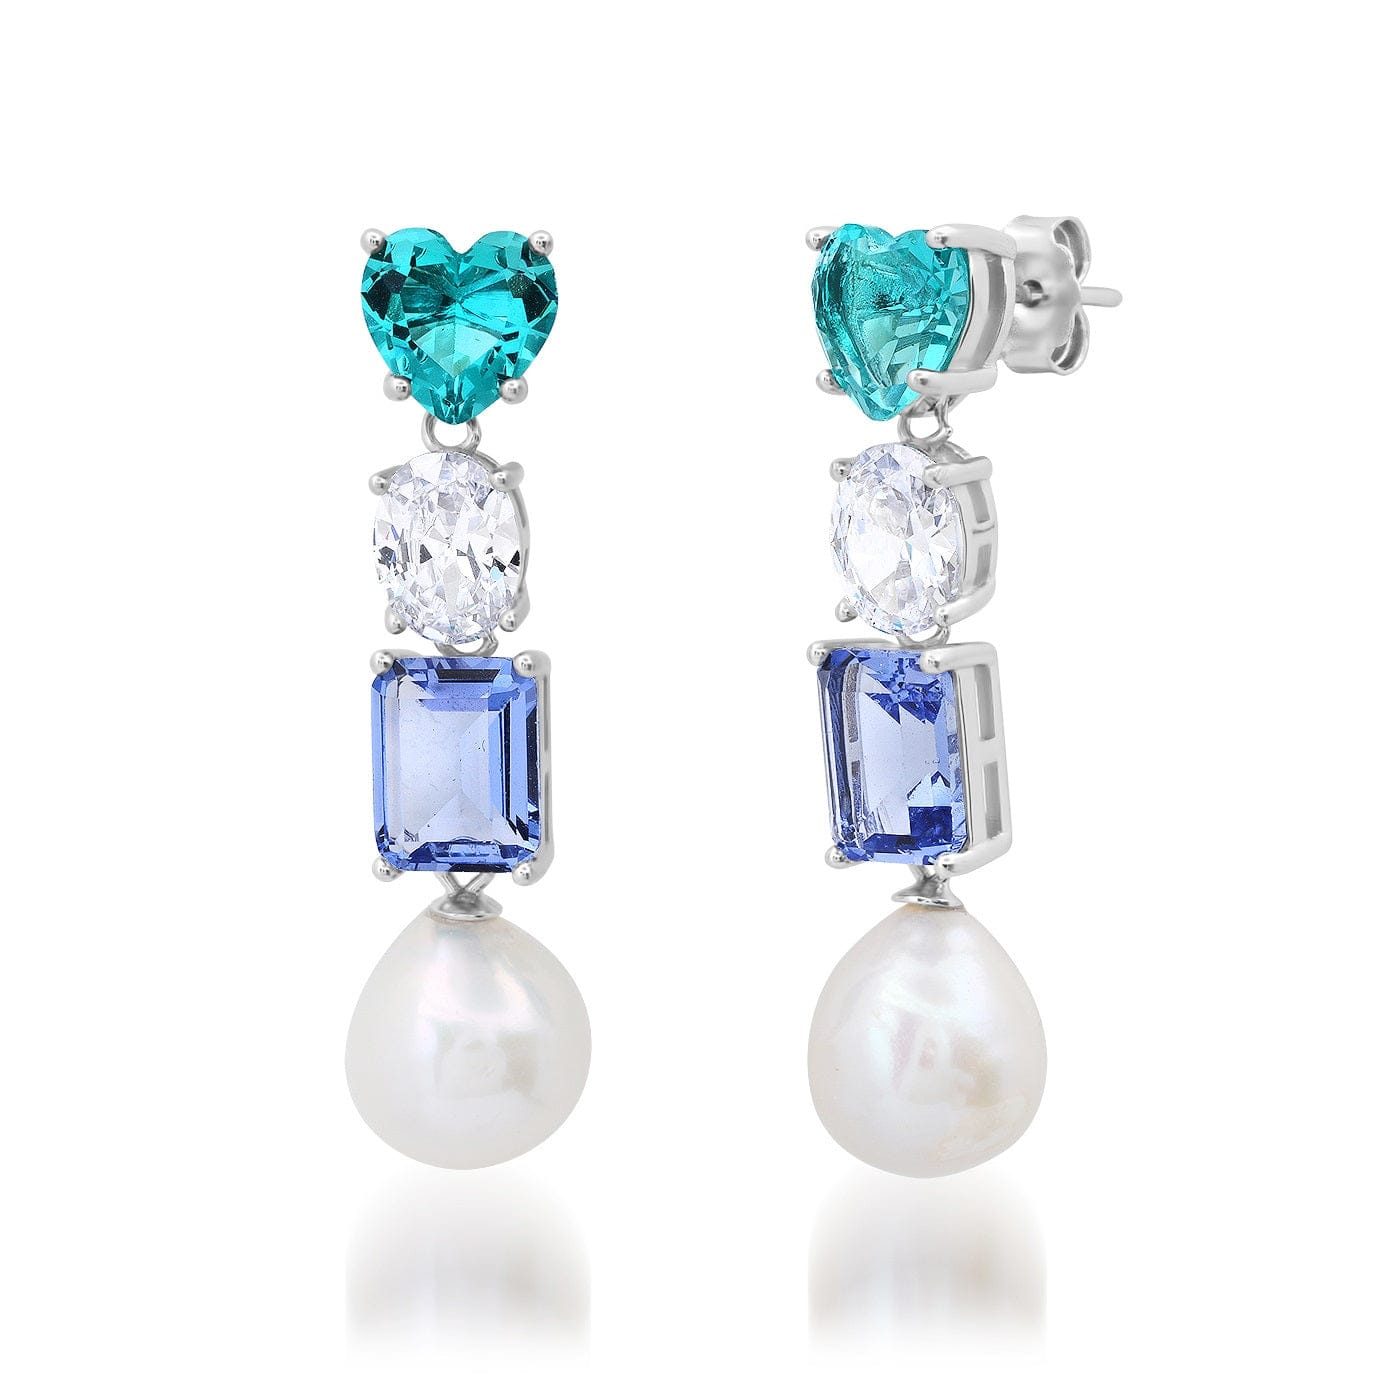 TAI JEWELRY Earrings Sky Blue Glass Heart and Pearl Drop Earrings